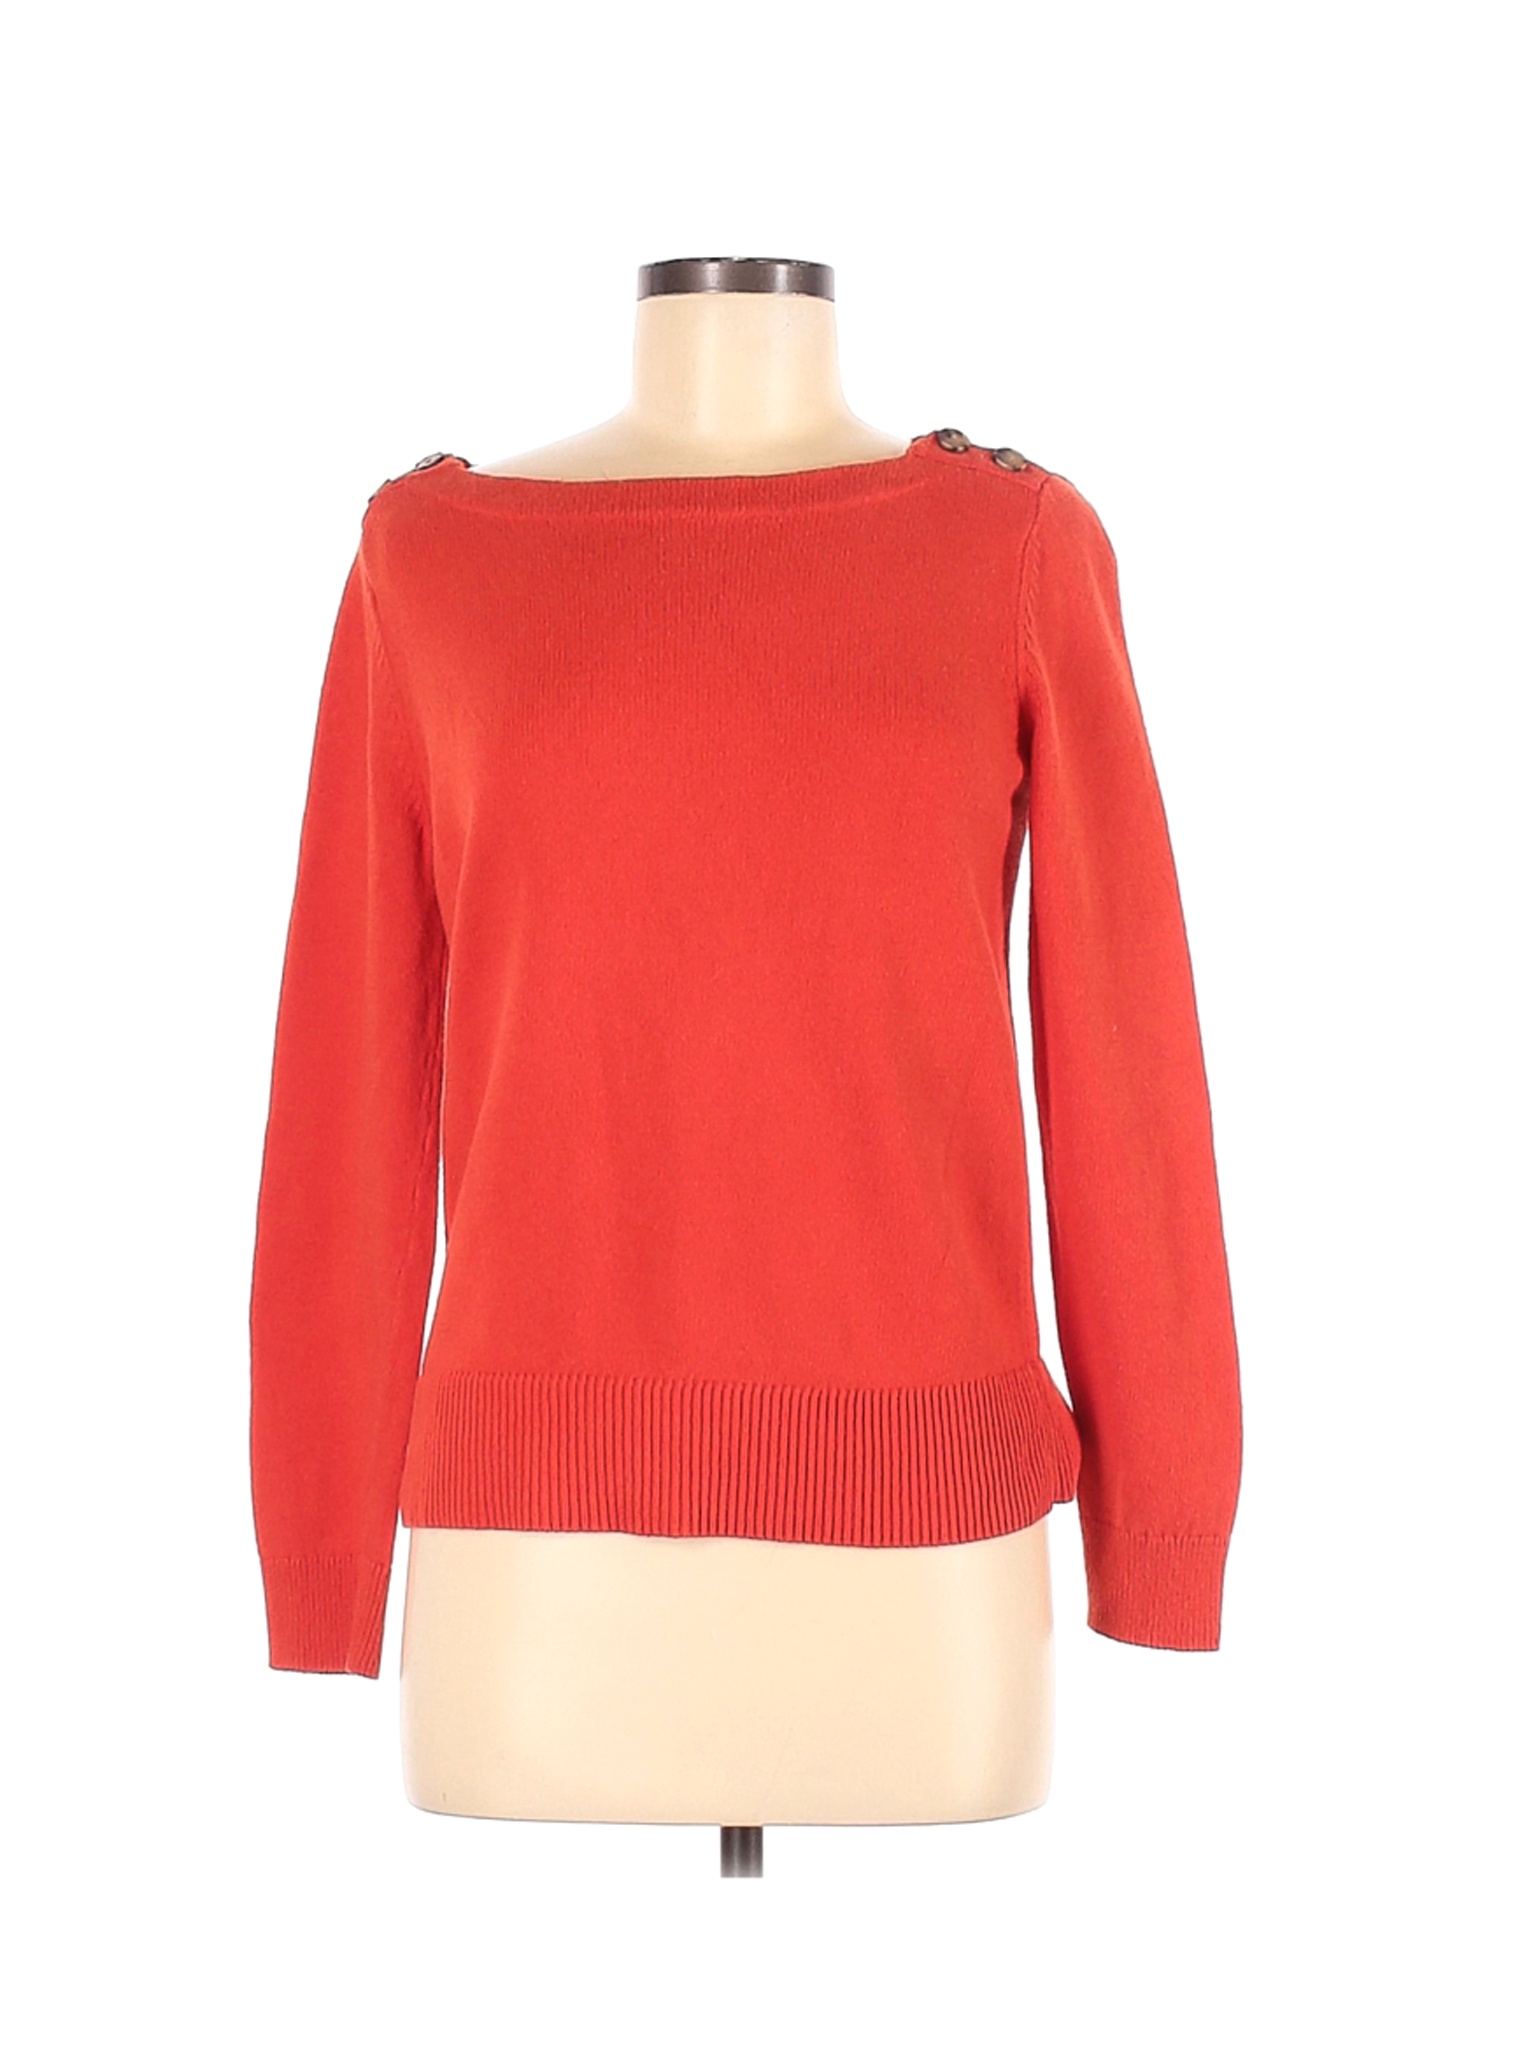 Ann Taylor LOFT Women Orange Pullover Sweater M | eBay